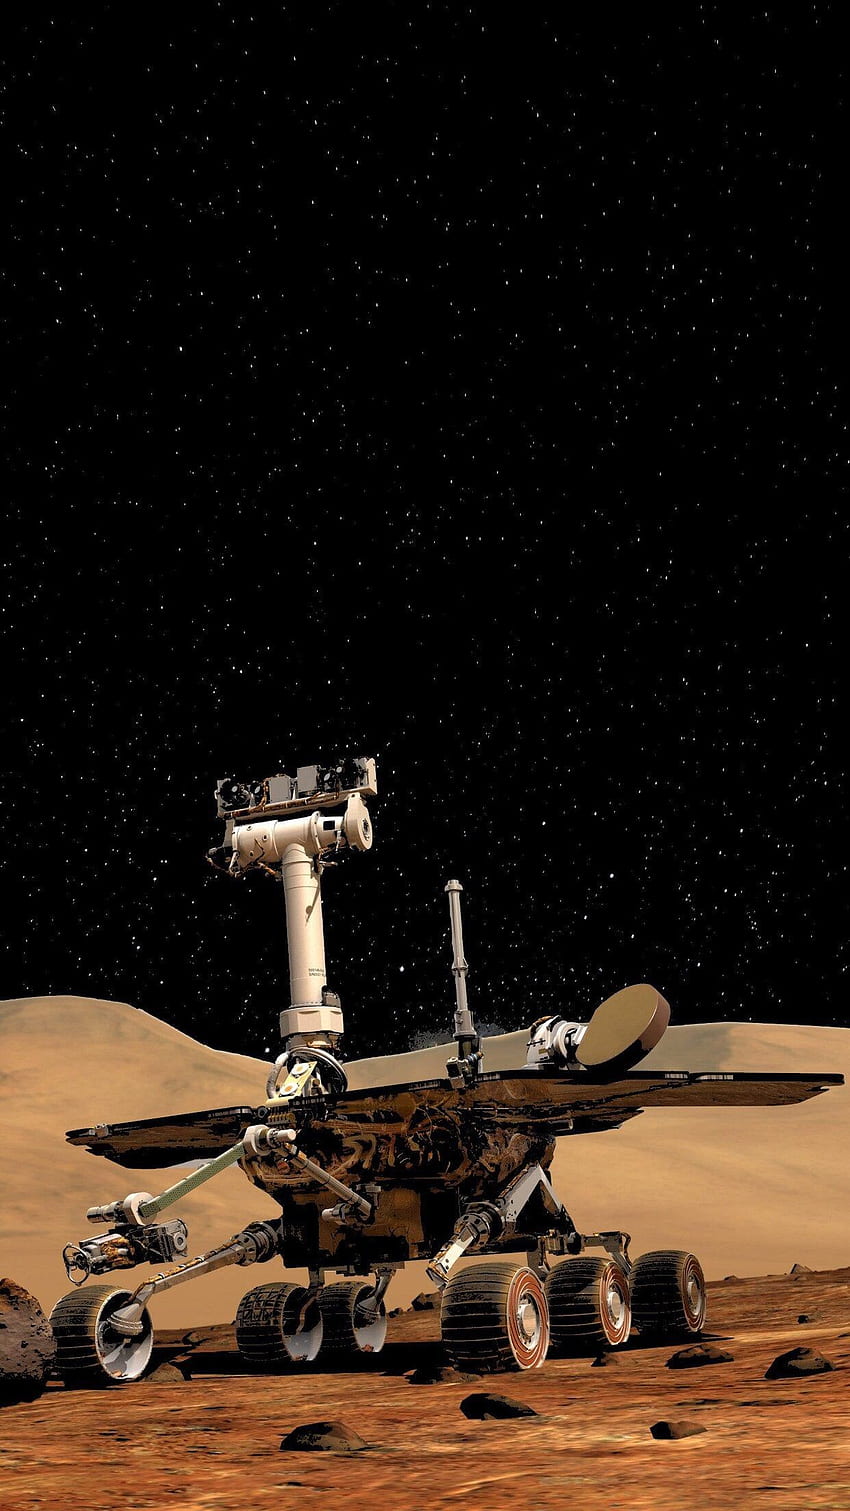 Oledified Opportunity Mars Rover phone、Curiosity Roverを作りました HD電話の壁紙